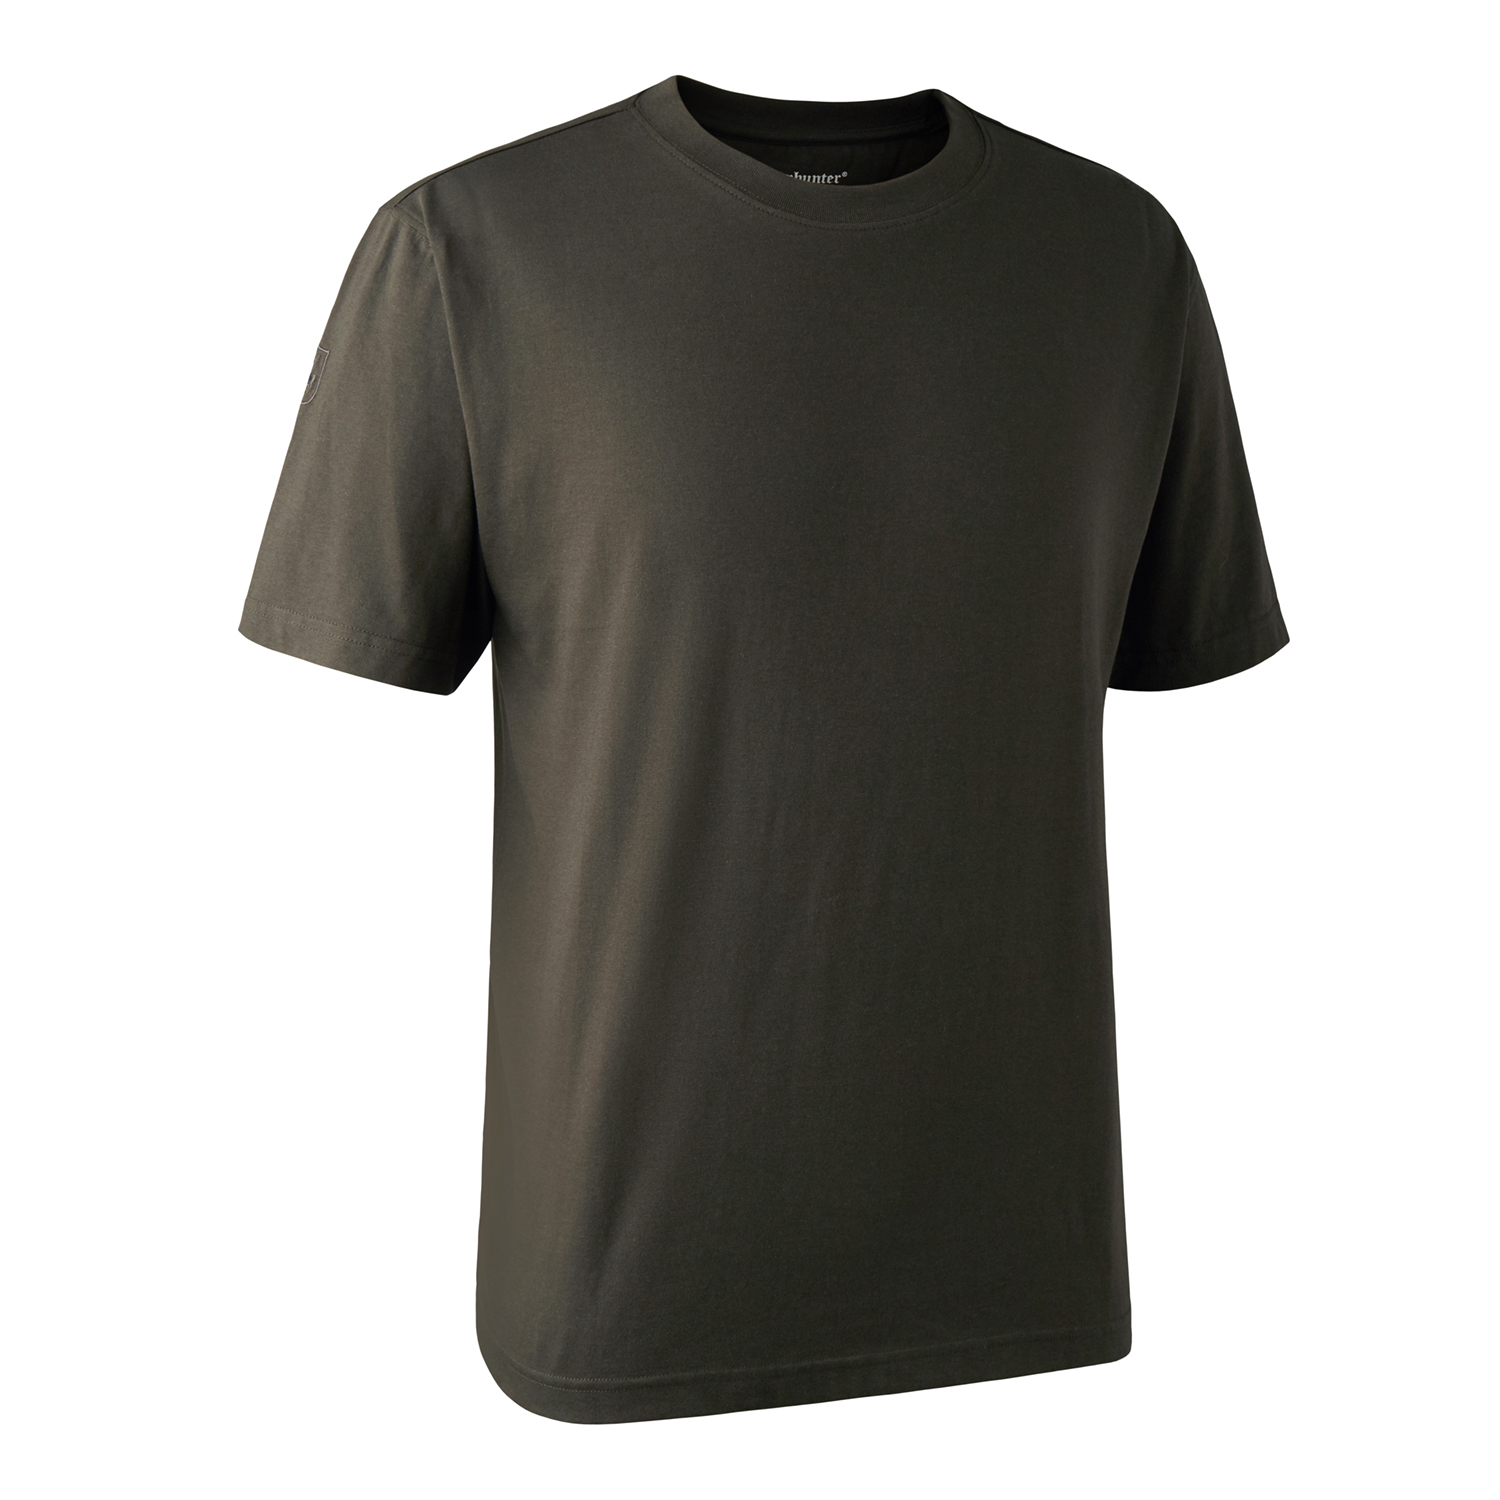 Swindon T-Shirt - Bark Green - M thumbnail